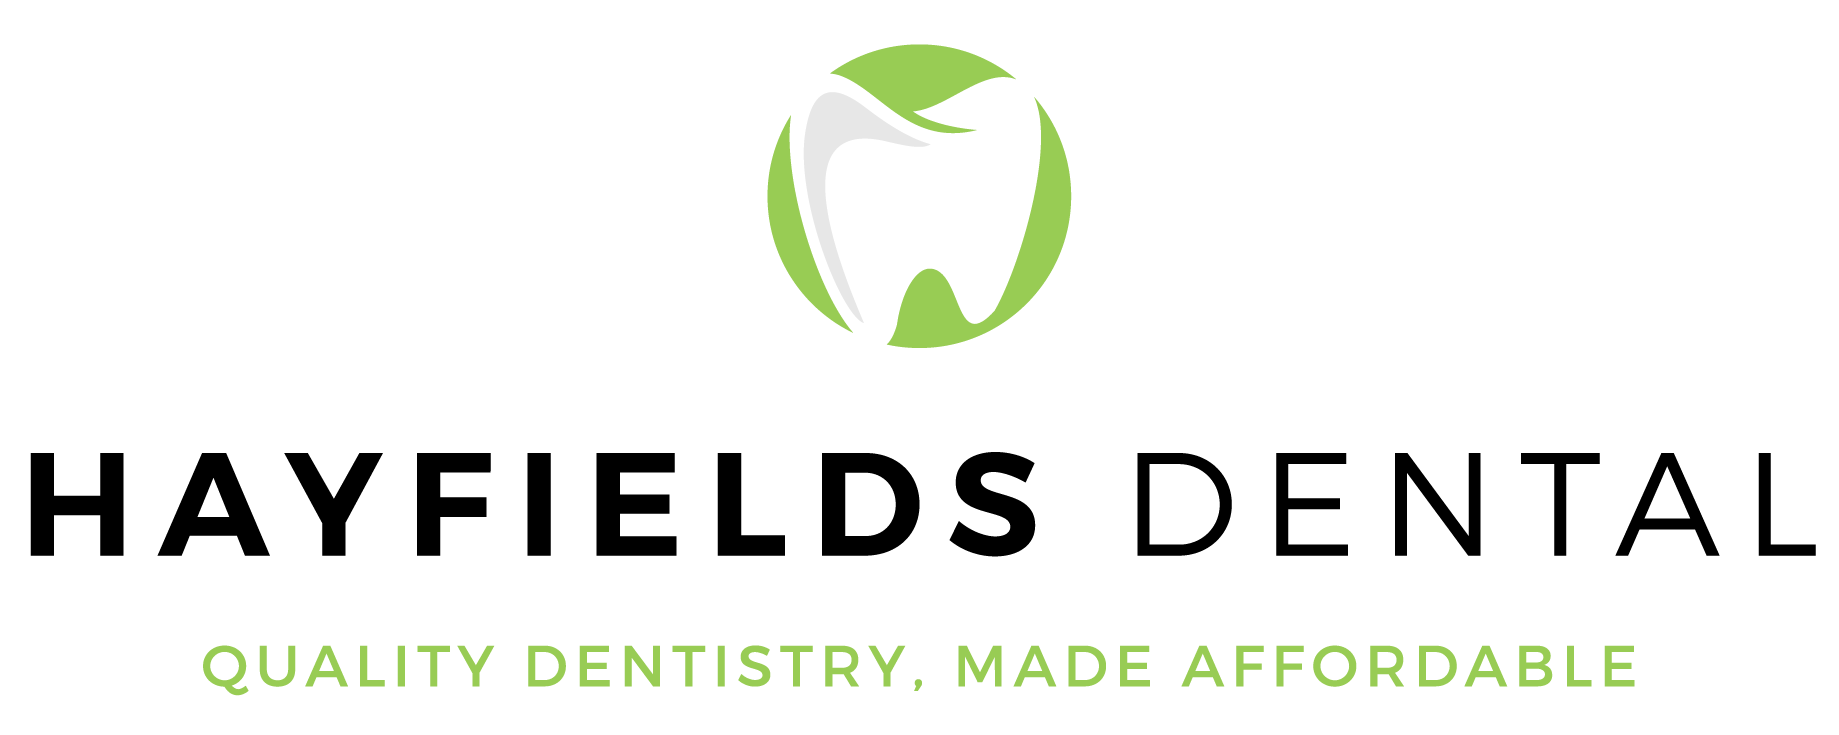 Hayfields Dental